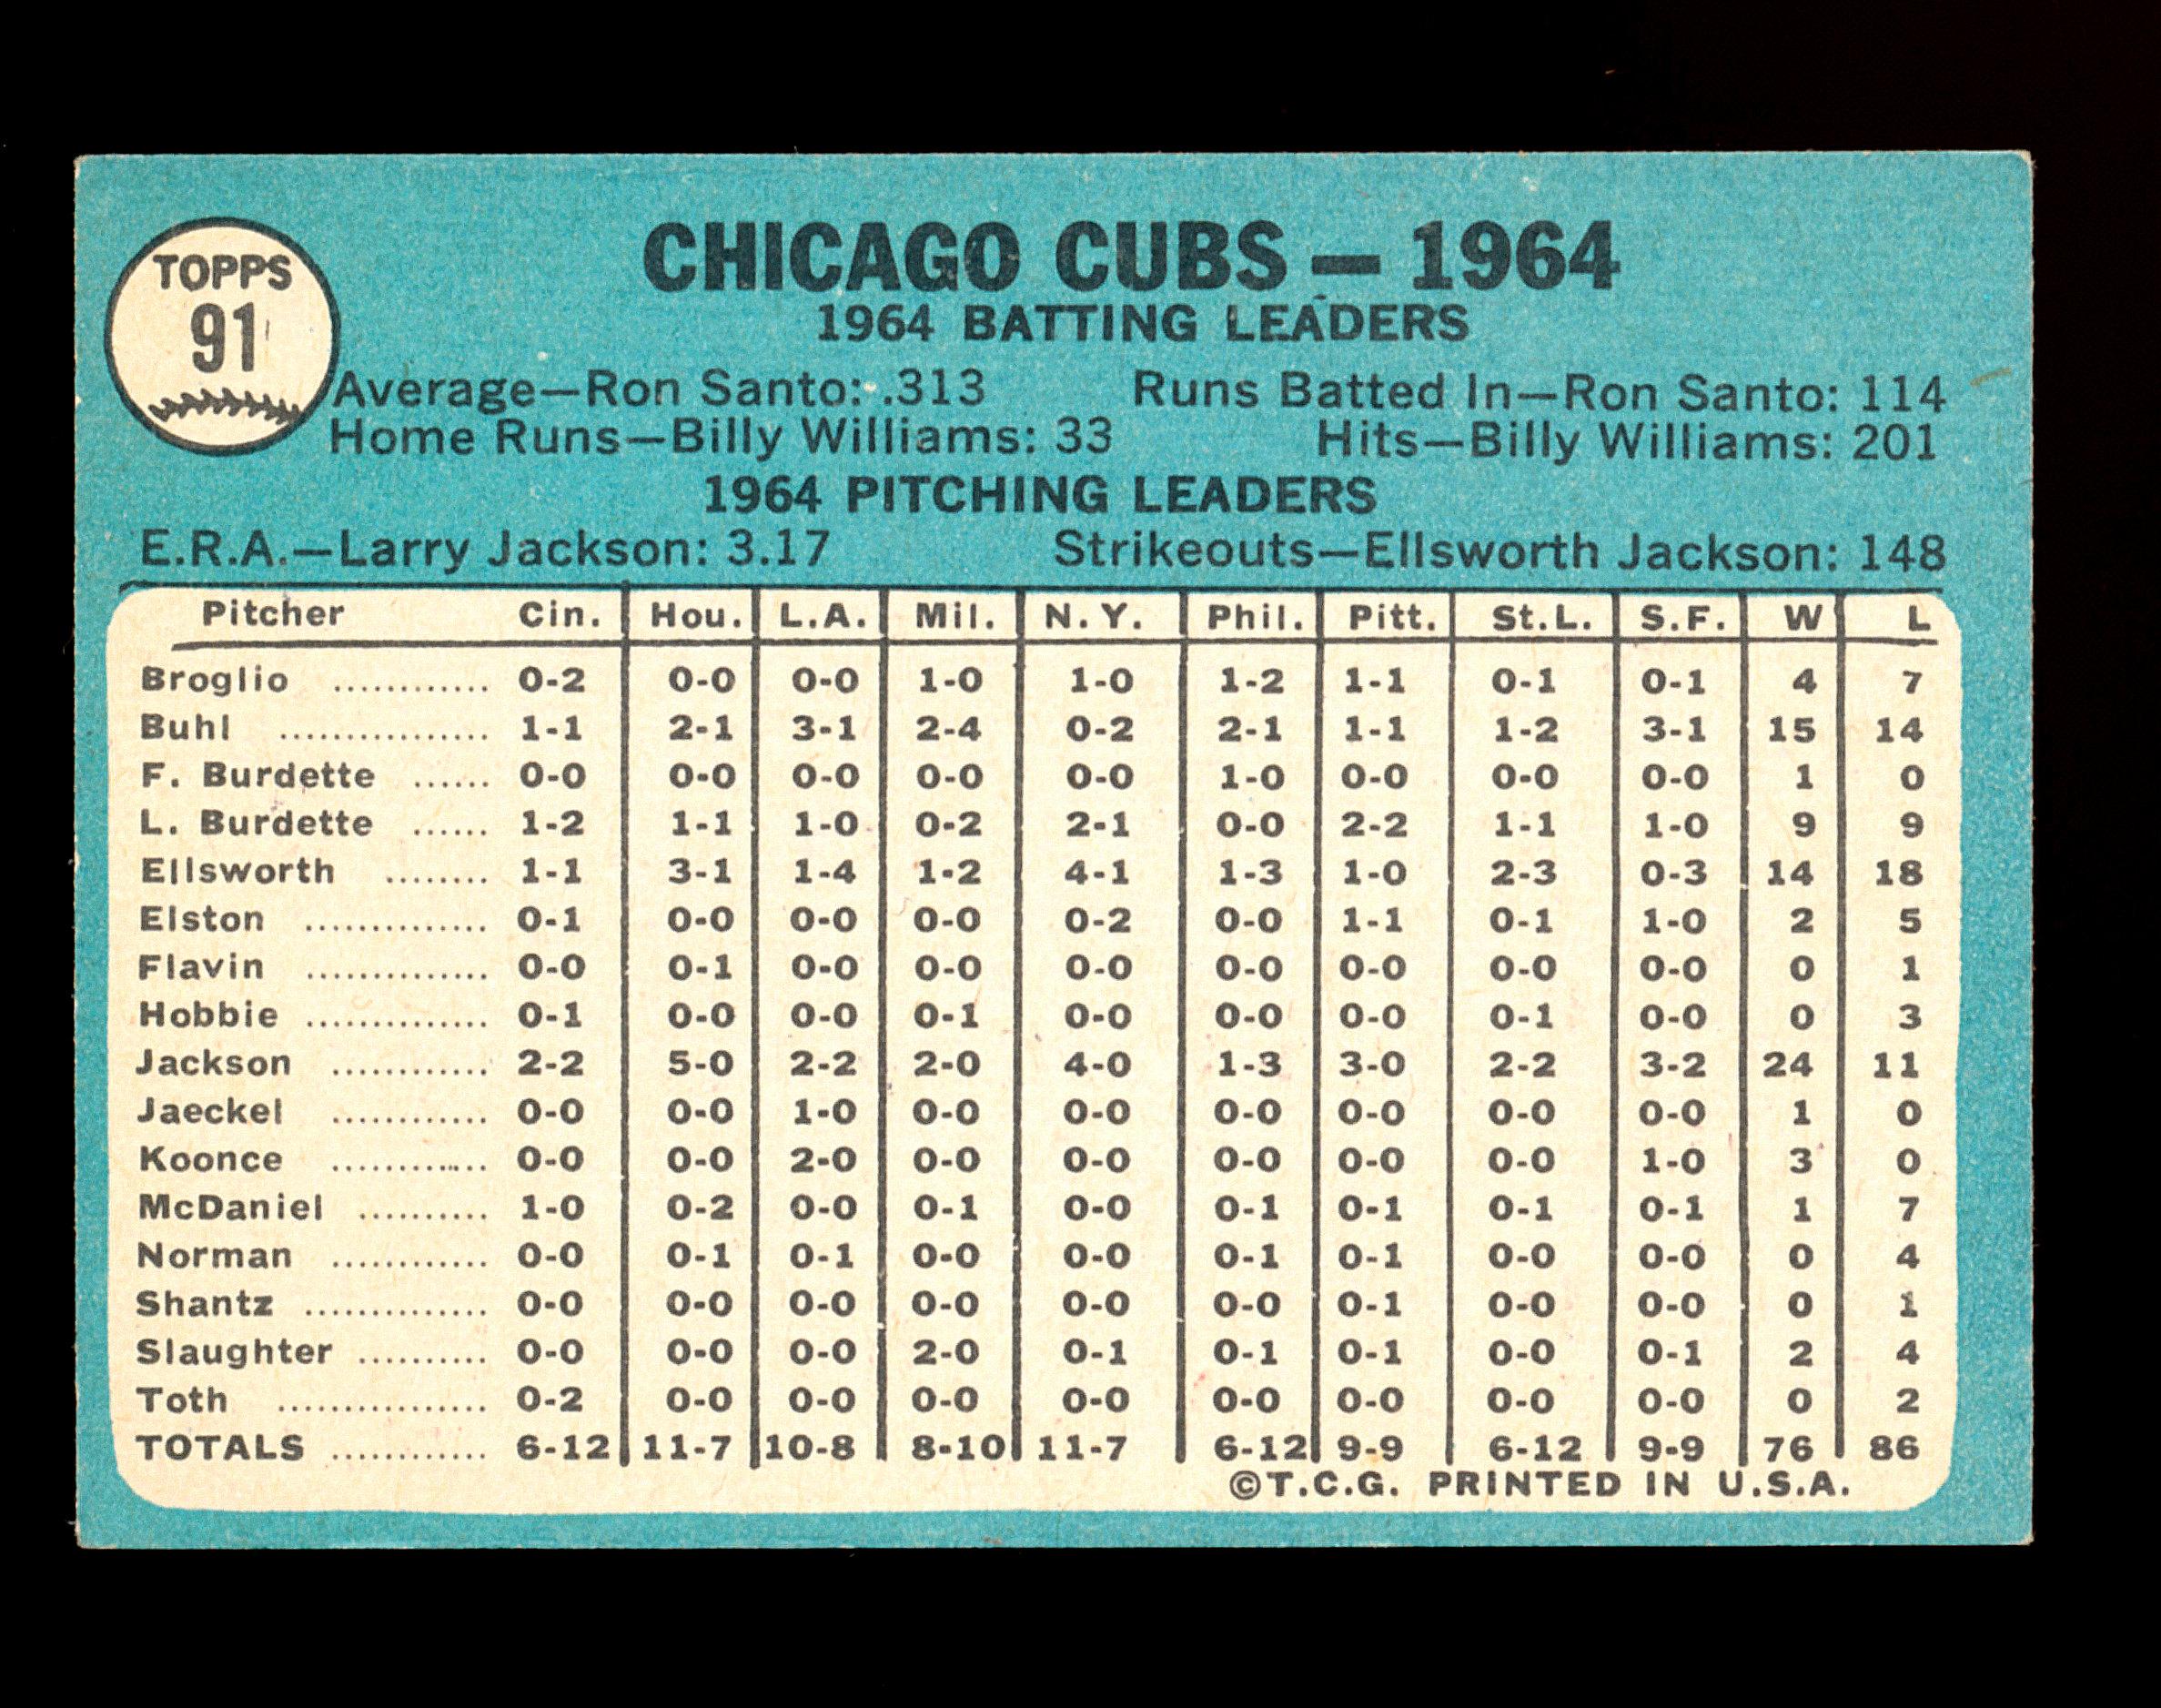 1965 Topps Baseball Card #91 Chicago Cubs Team Card